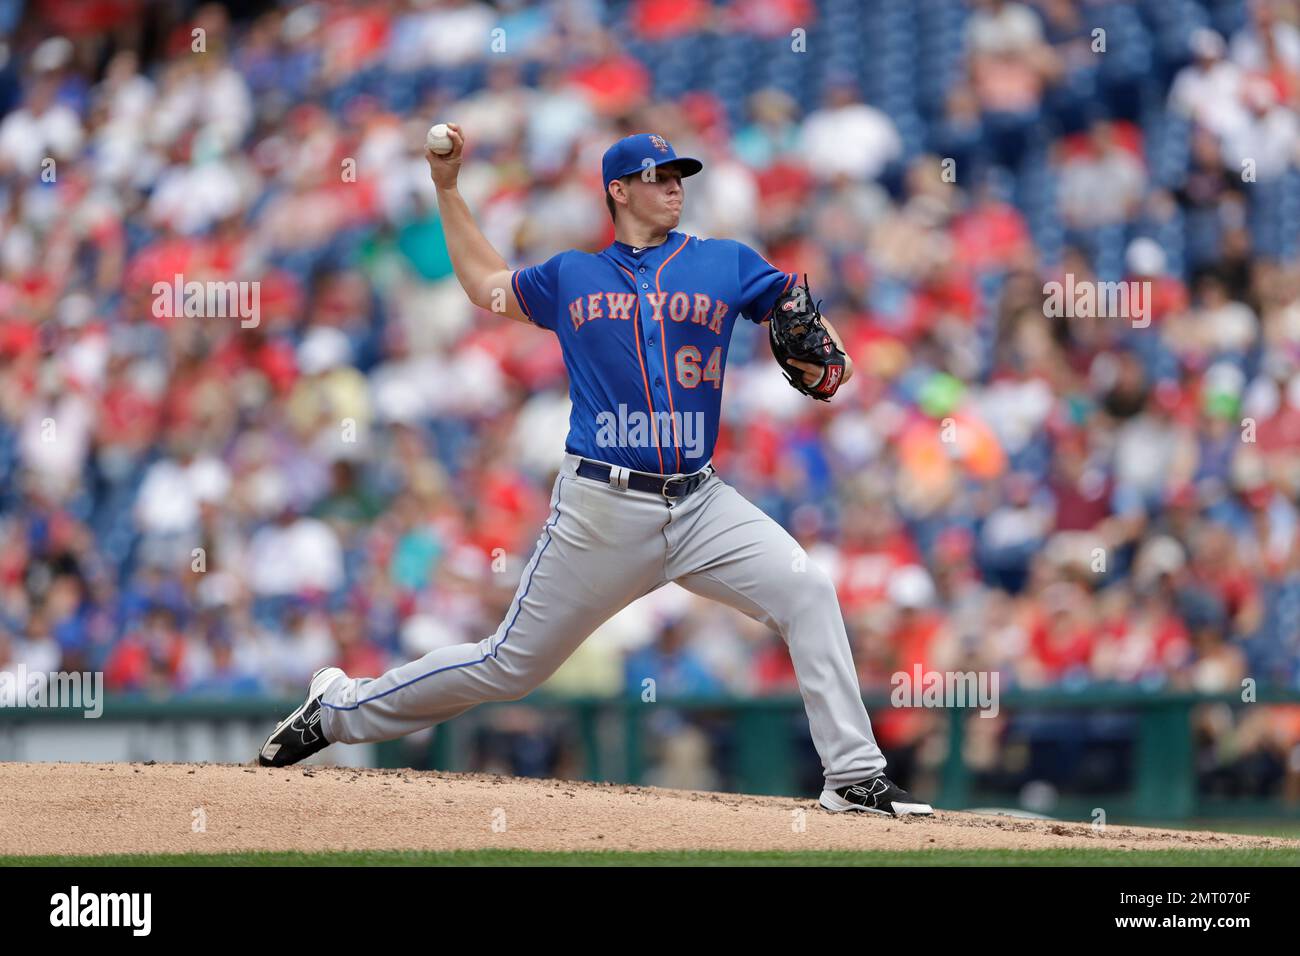 New York Mets' Chris Flexen in action during a baseball game